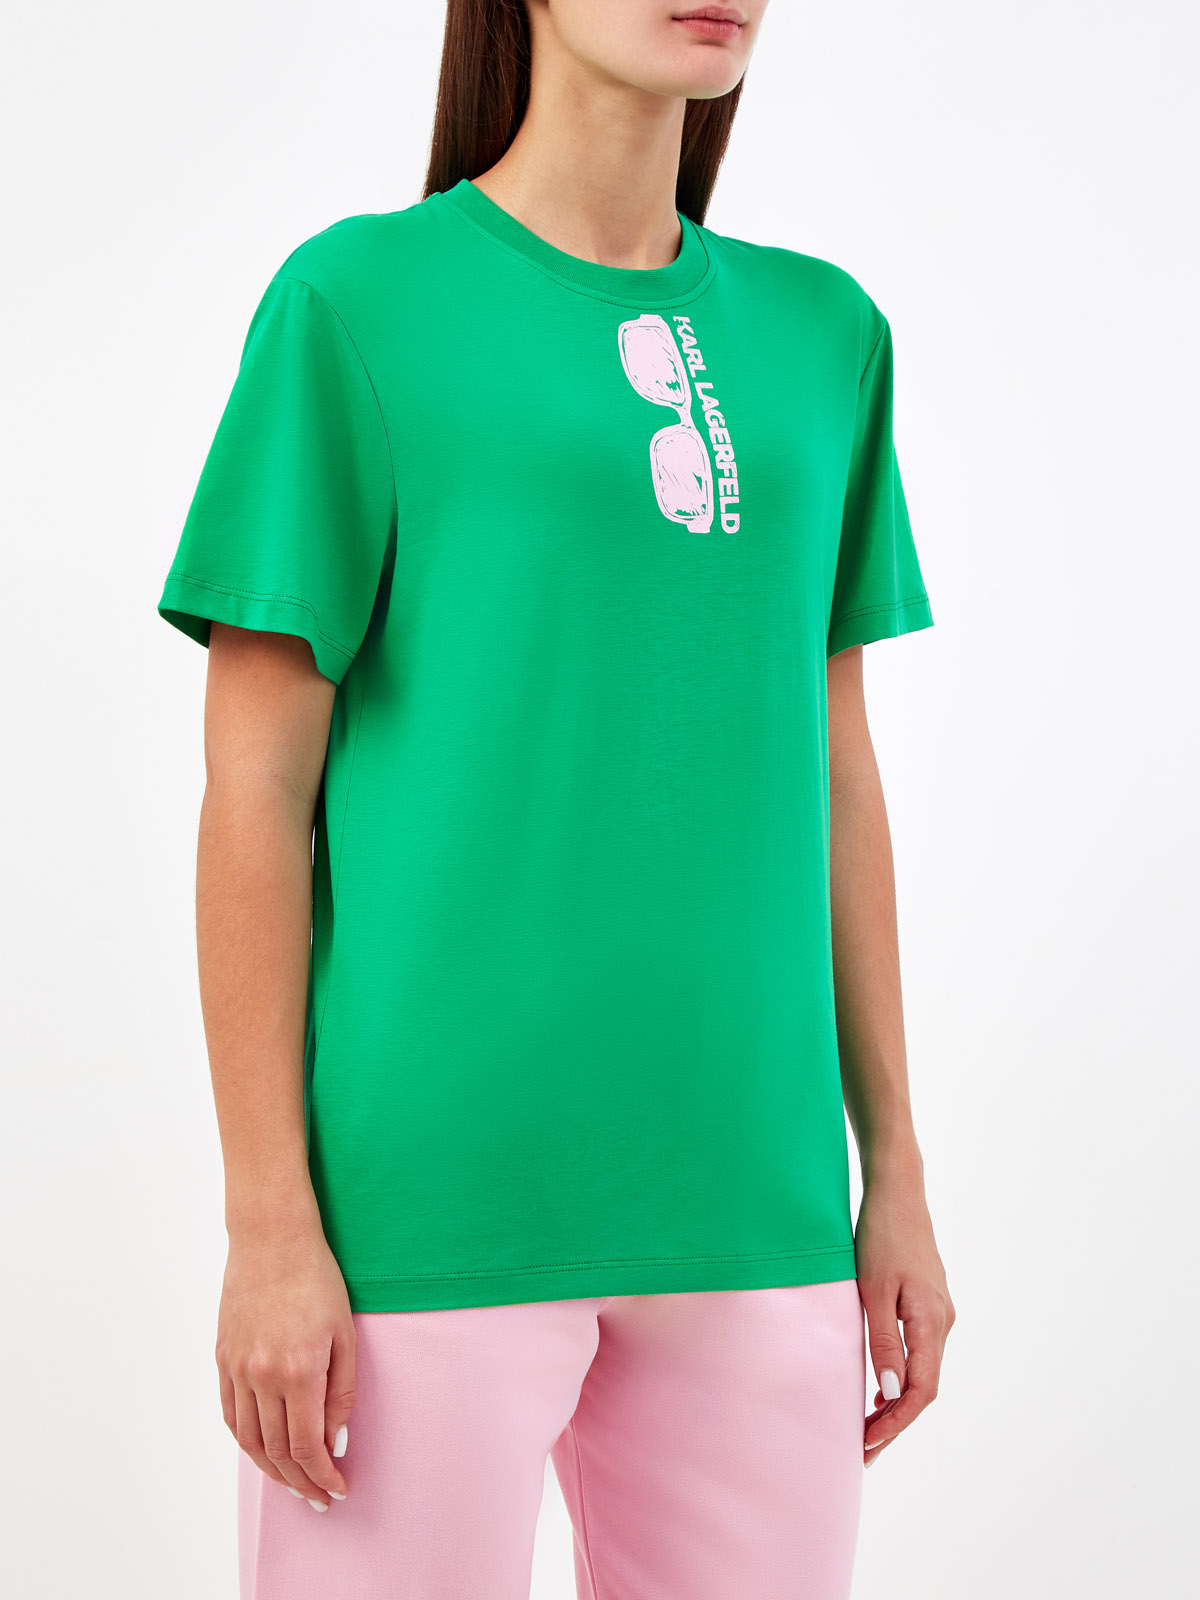 Хлопковая футболка-oversize с контрастным принтом KARL LAGERFELD, цвет зеленый, размер XS;S;M;L;XL - фото 3